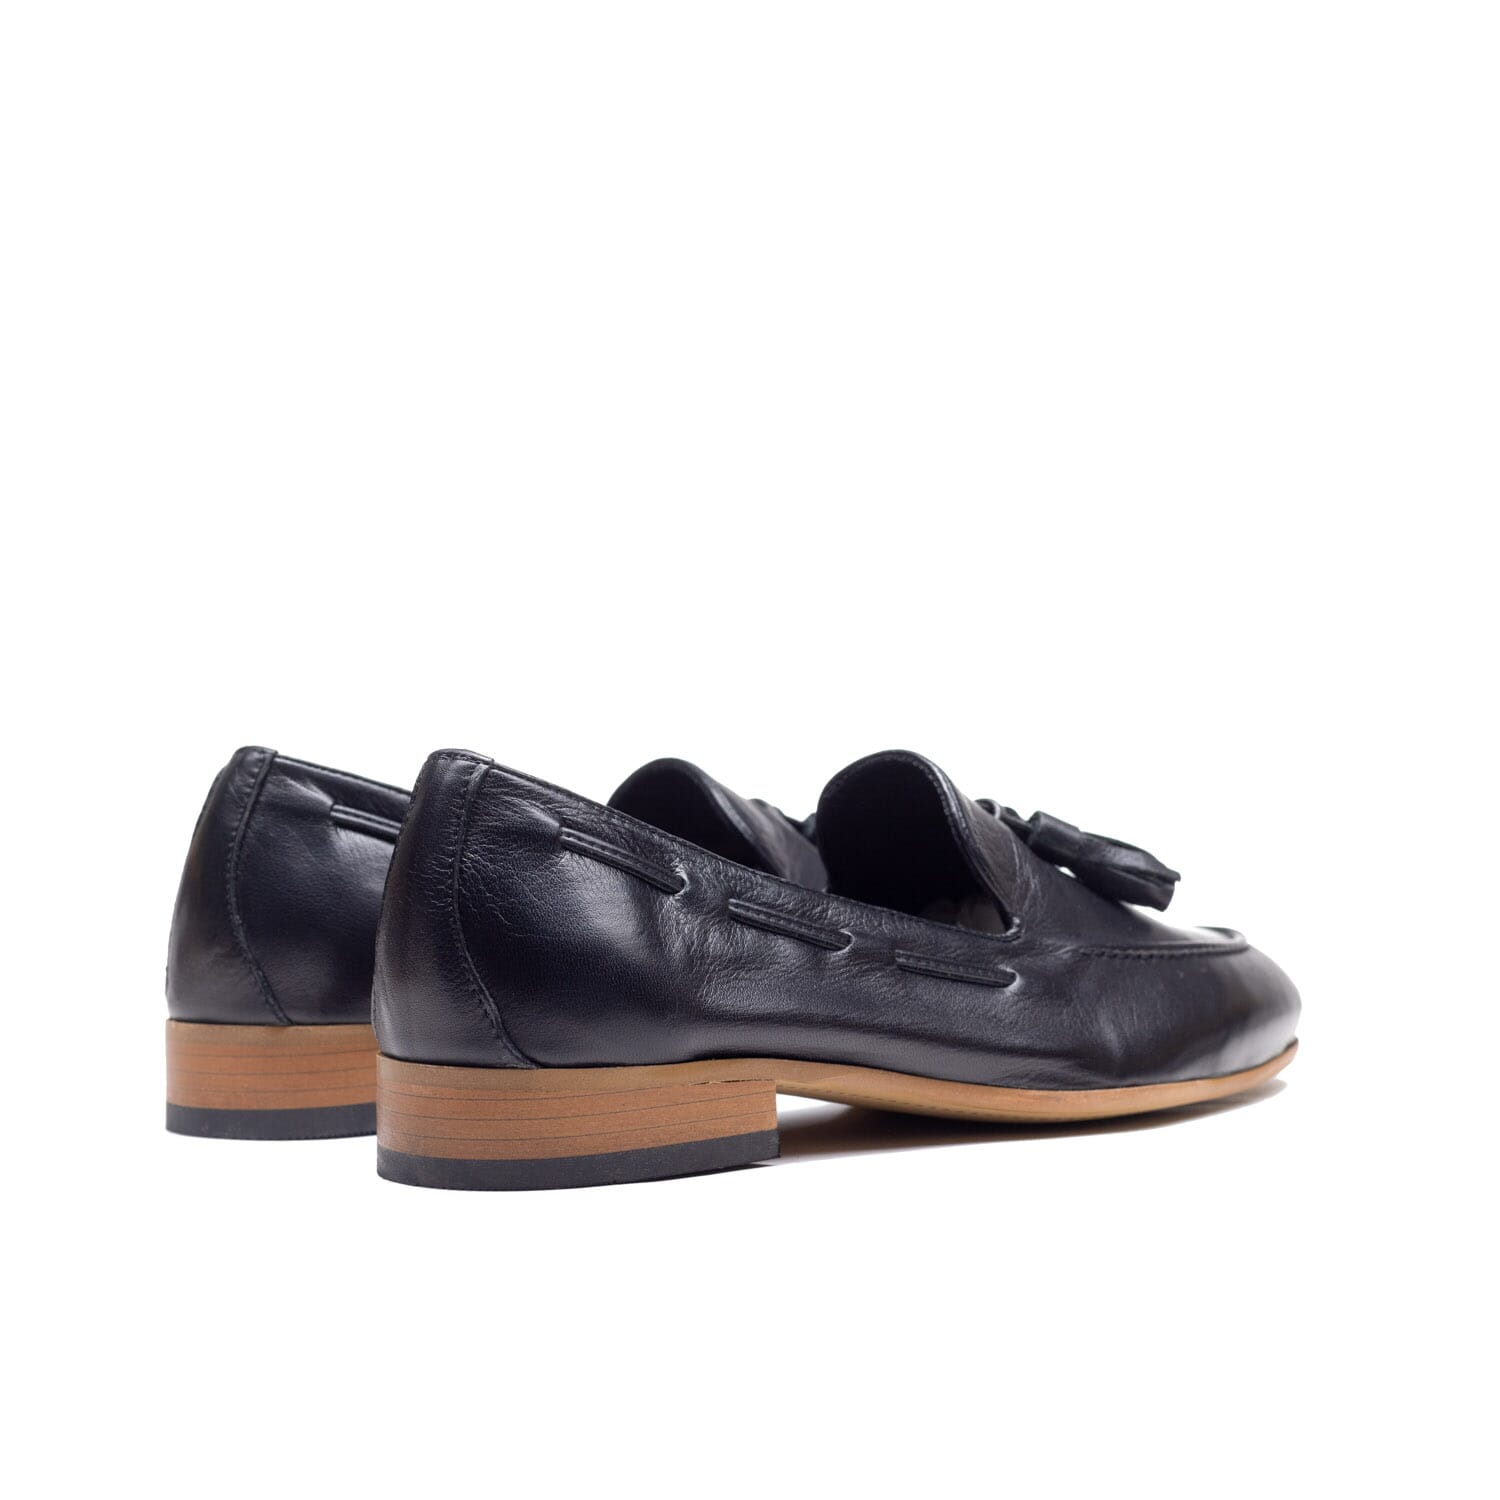 Bulletti – Power – Black – Perocili Shoes